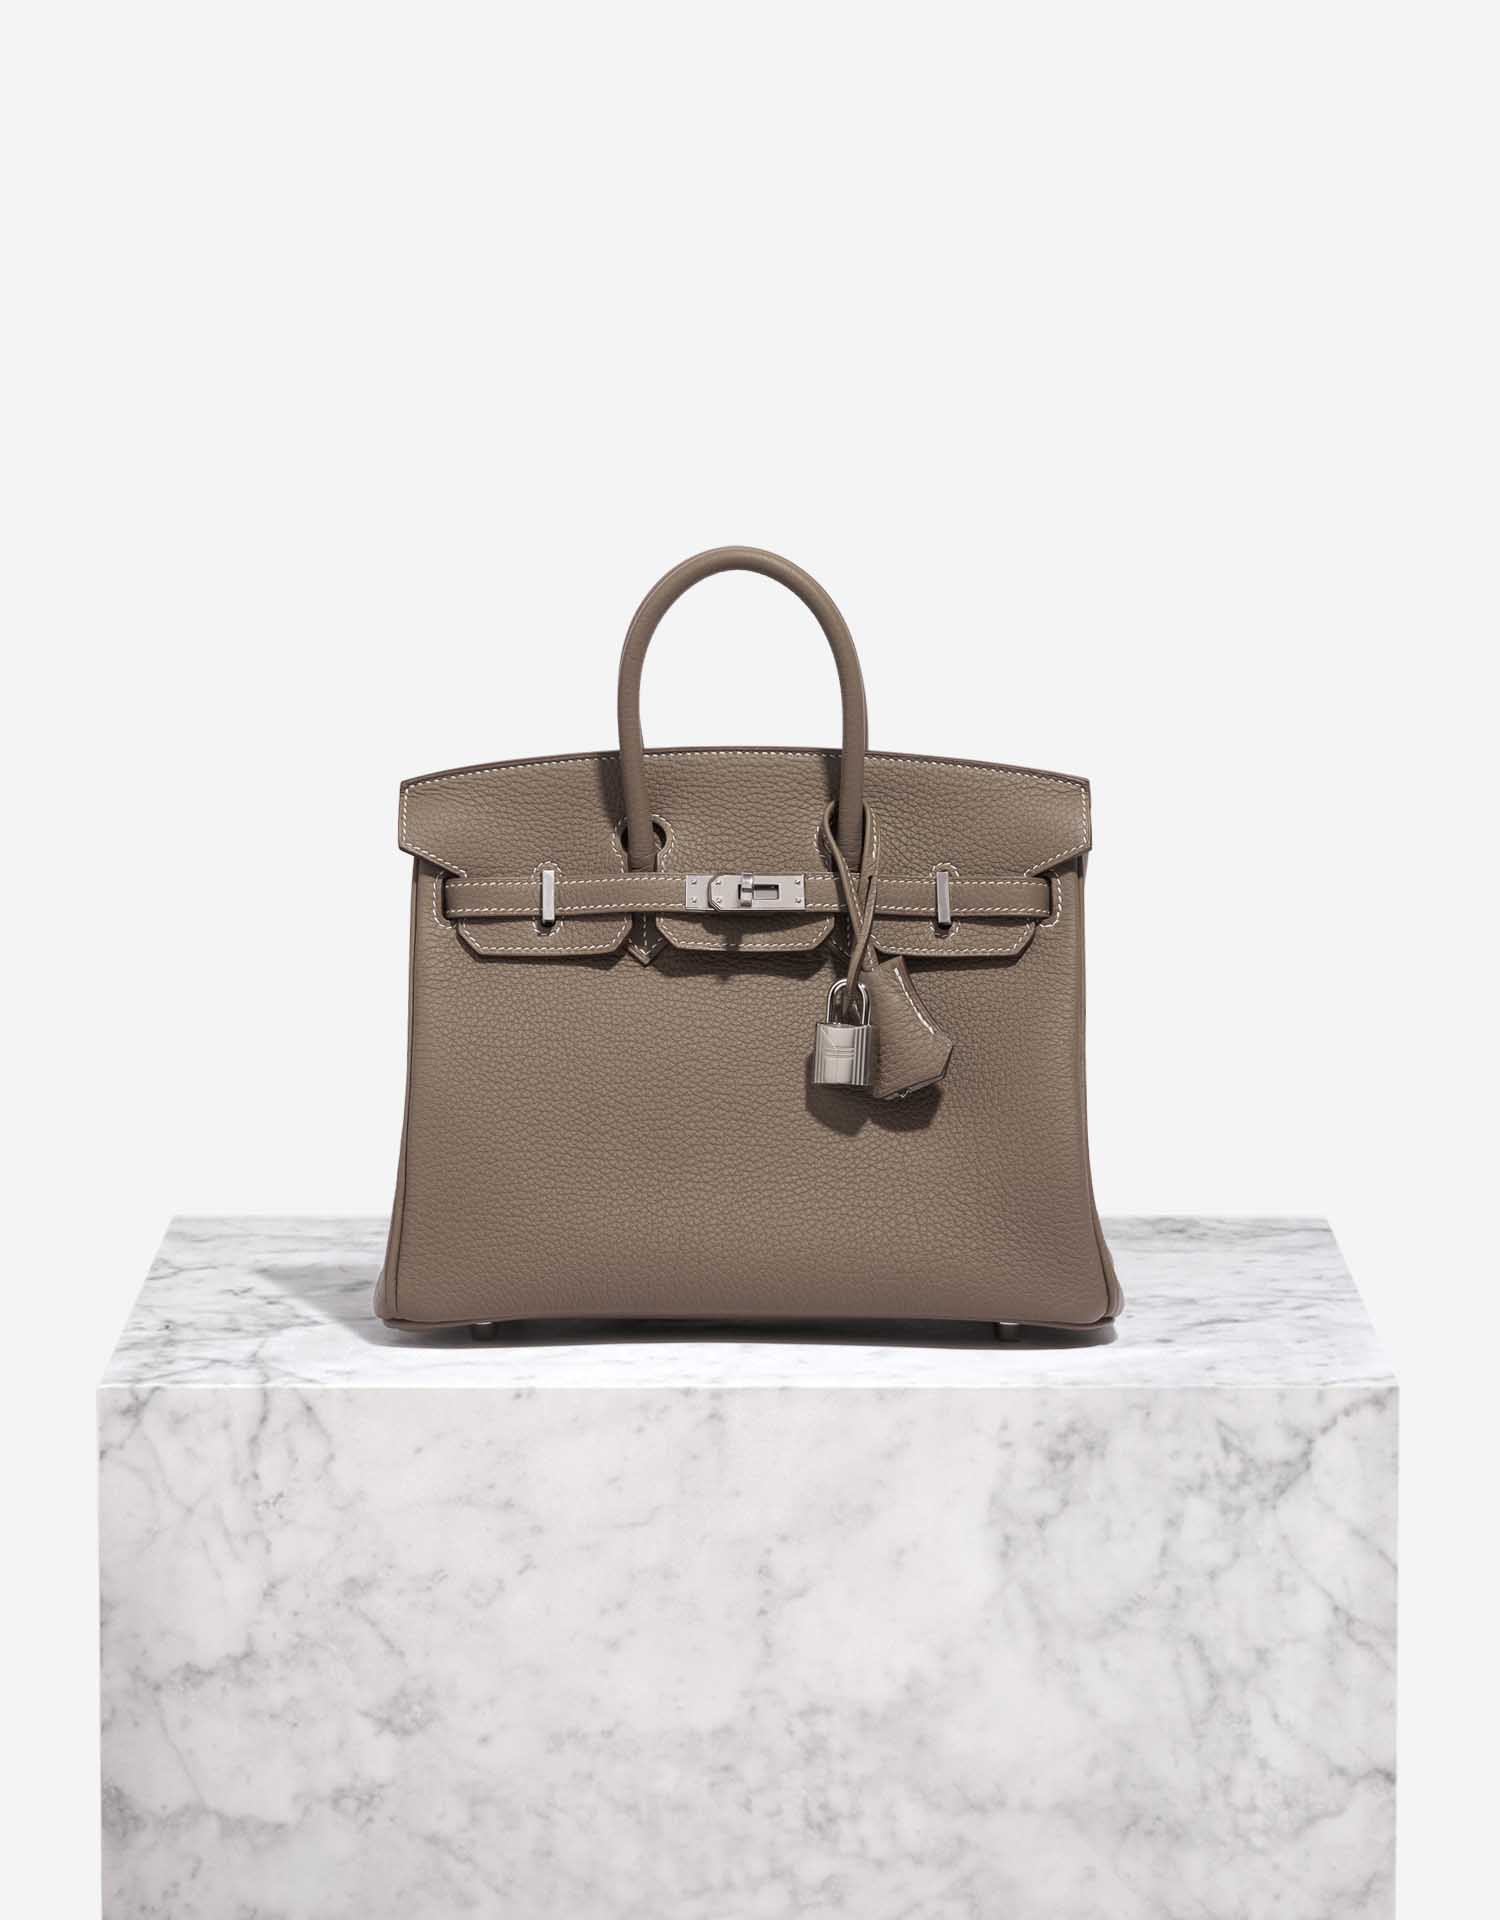 Hermès - Hermès Birkin 25 Togo Leather Handbag-Rose Purple Silver Hardware